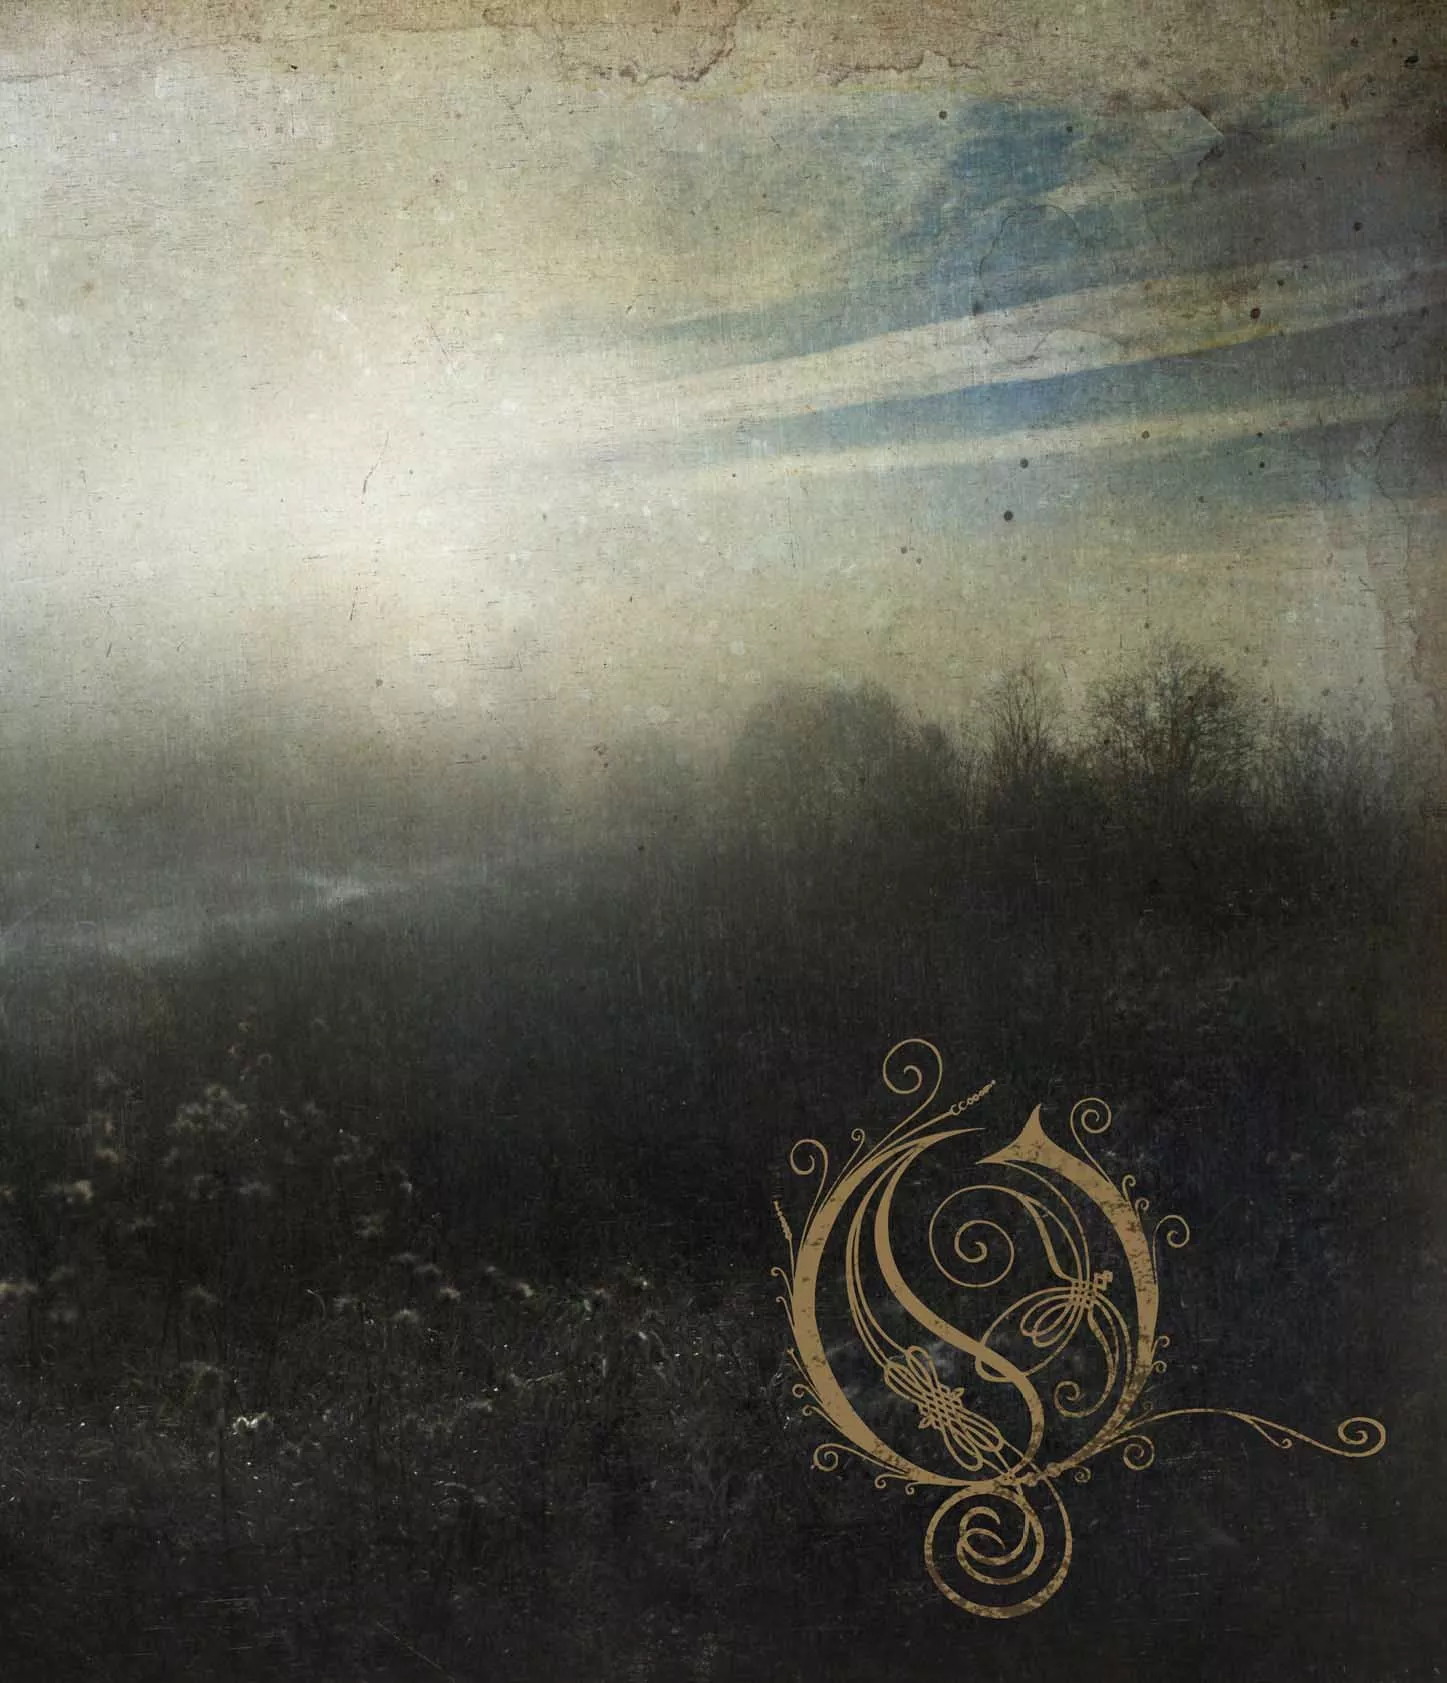 Book Of Opeth - Opeth